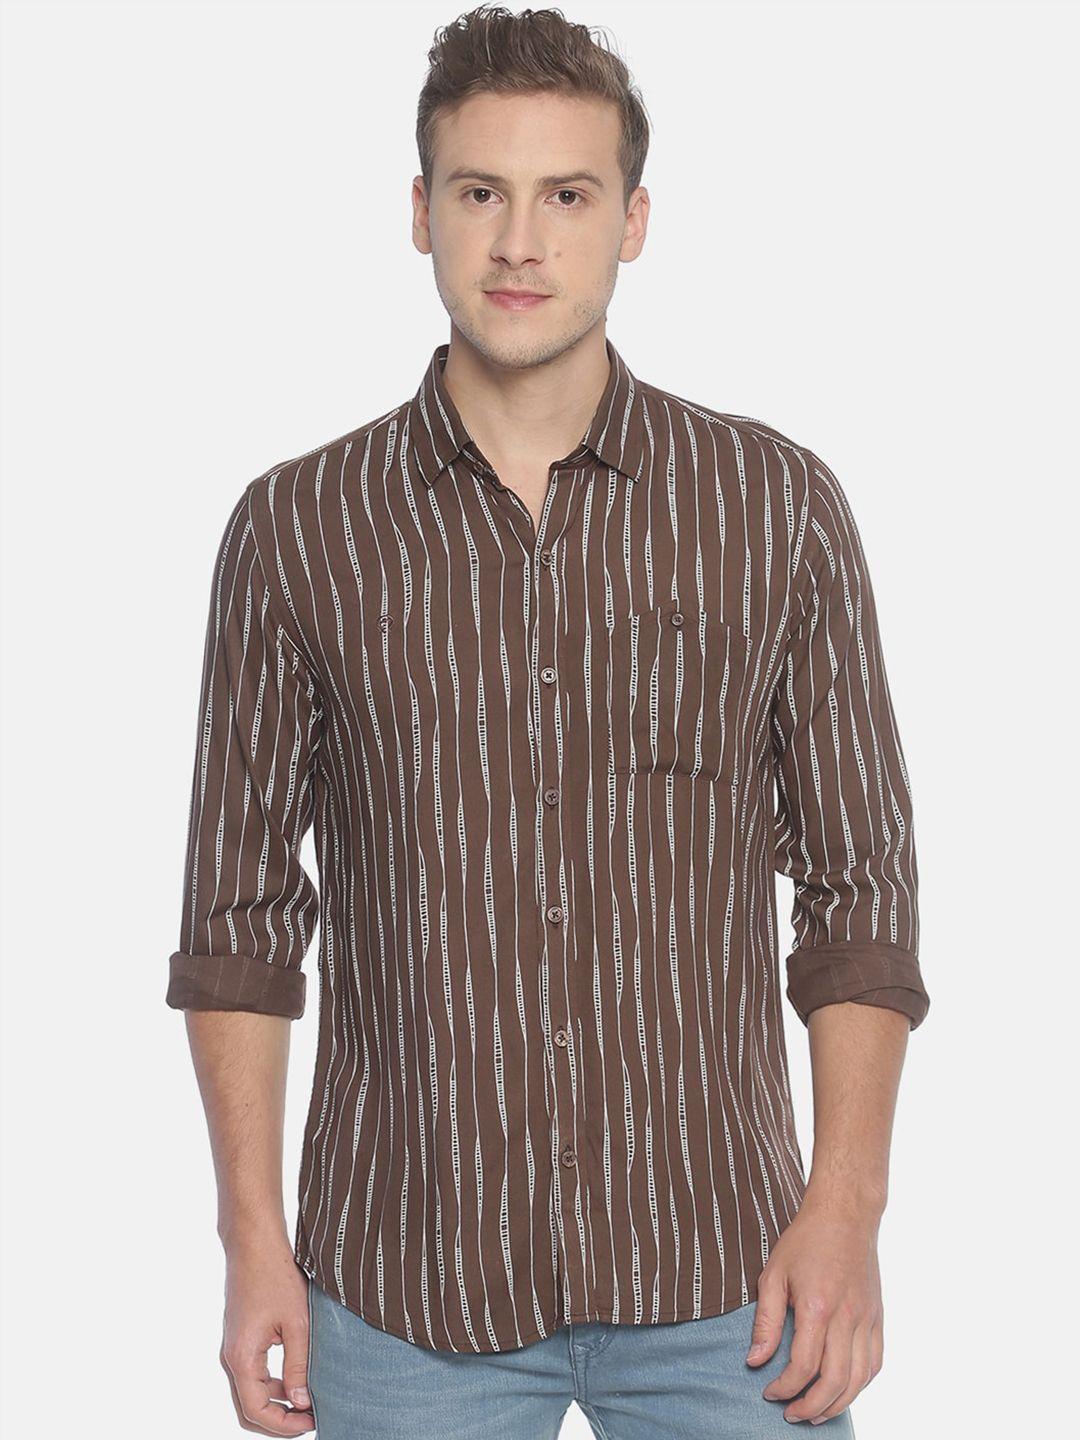 couper-&-coll-men-brown-premium-slim-fit-striped-cotton-casual-shirt